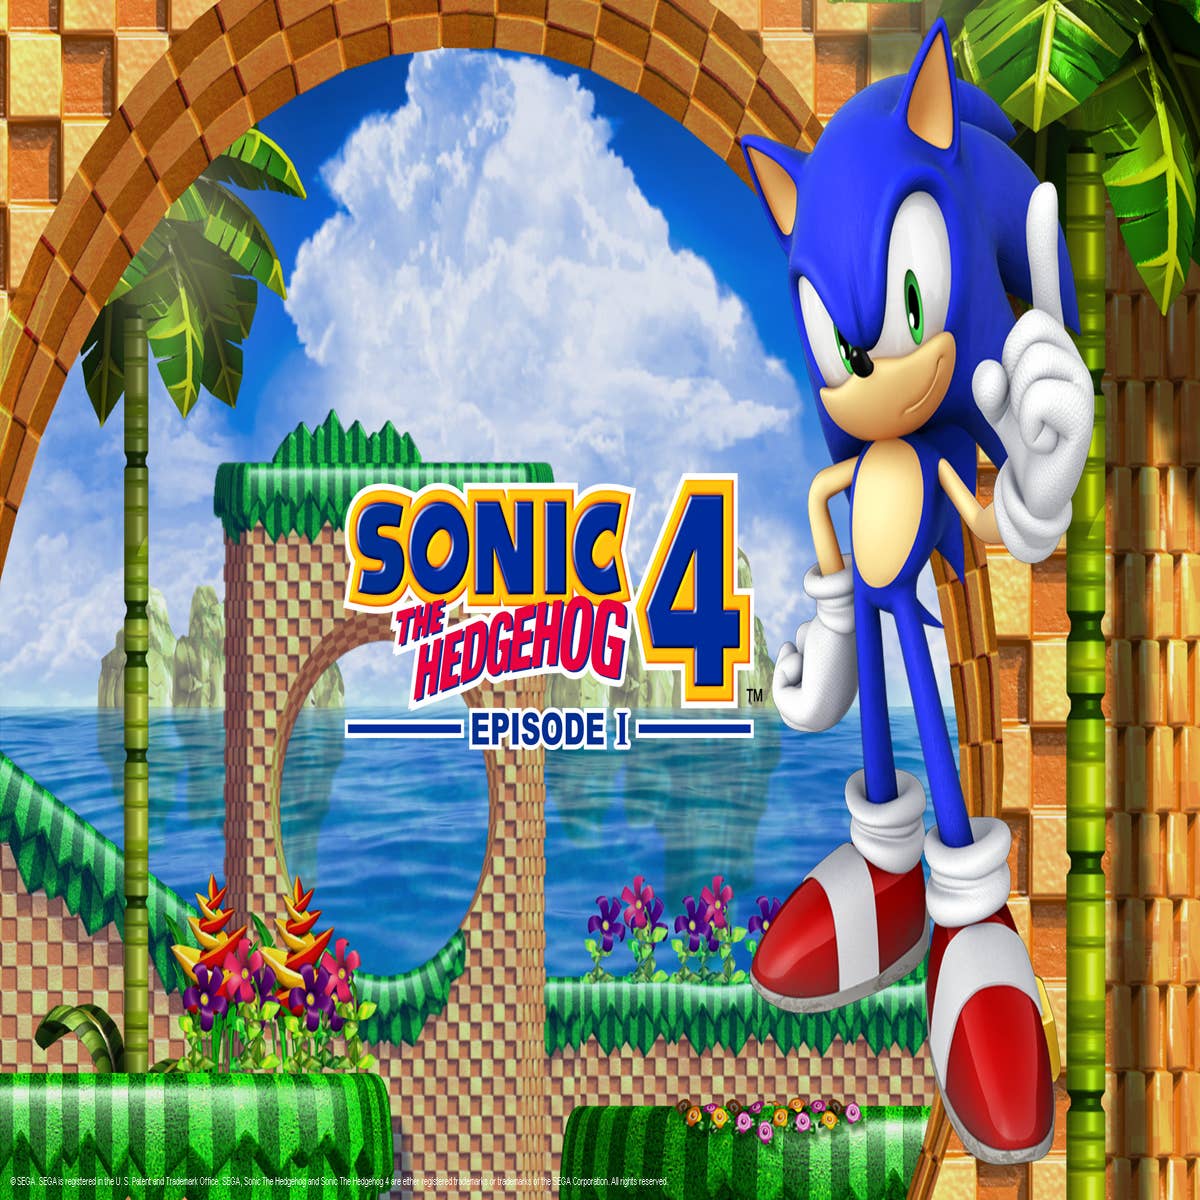 Sonic 4 Episode 2 Details Coming Very Soon Says Sega - My Nintendo News